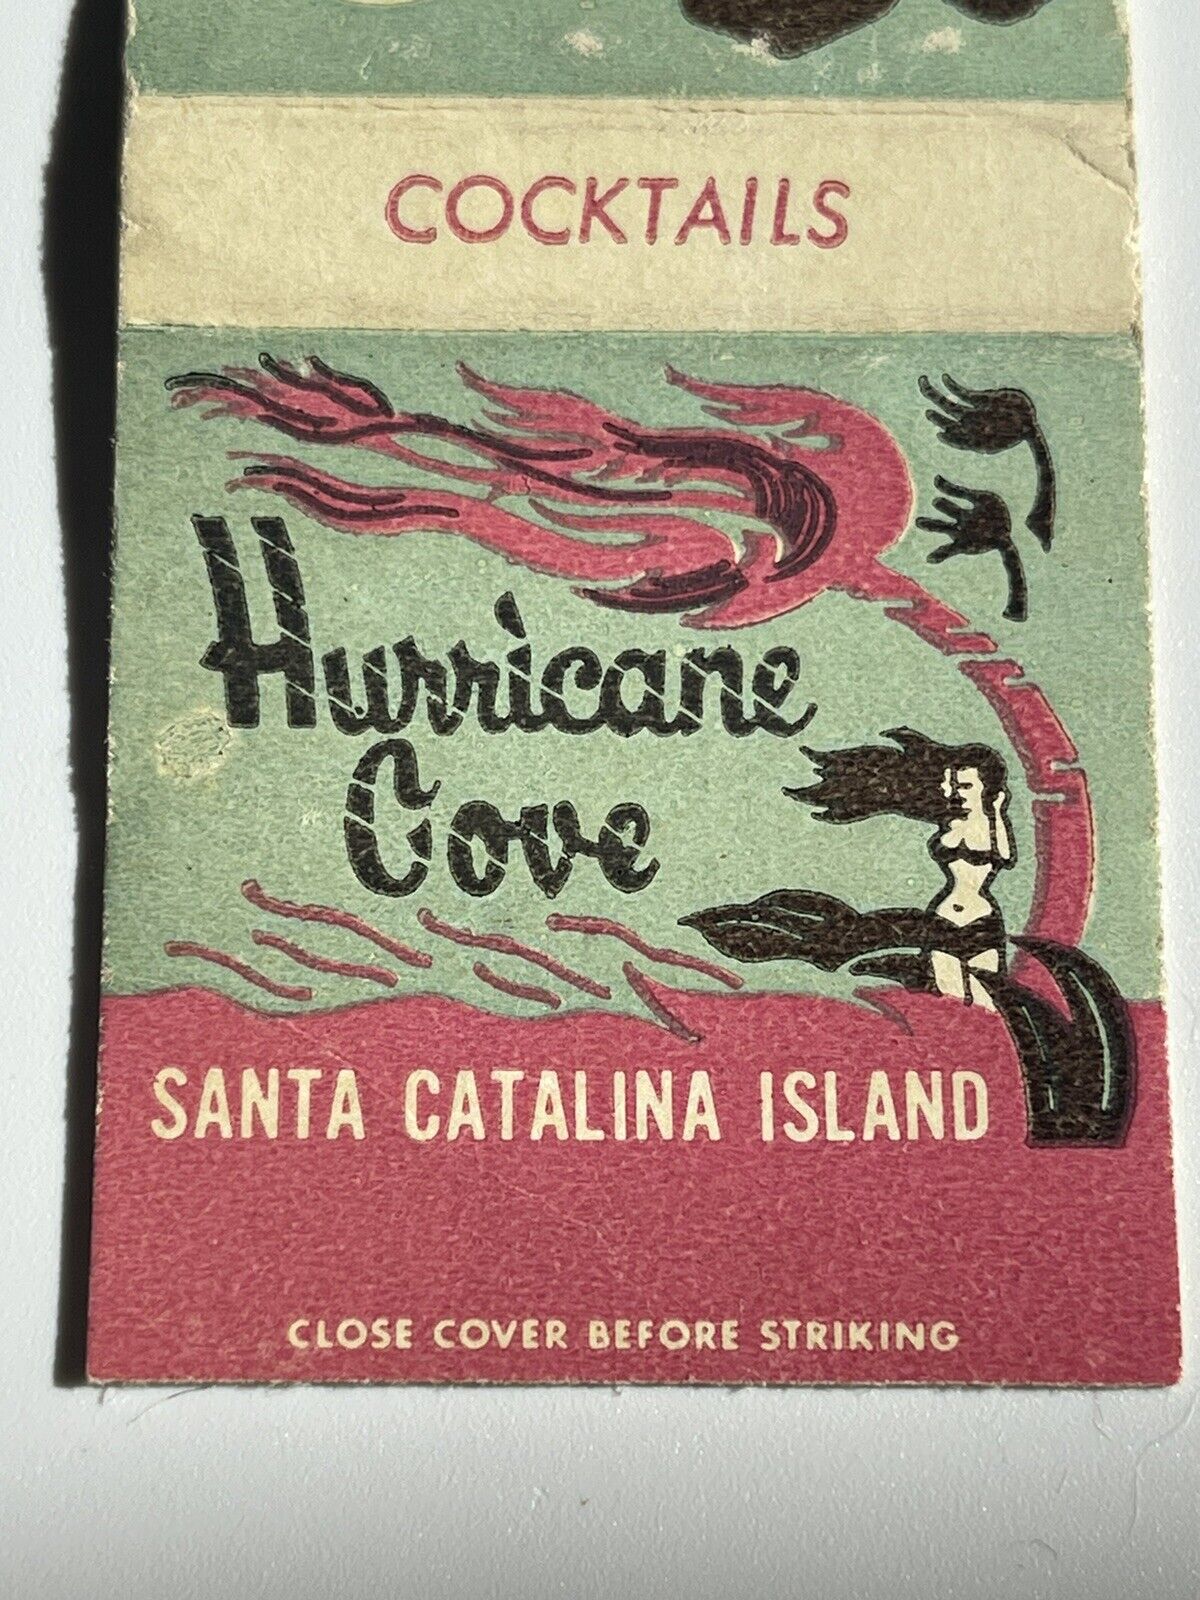 Vintage Hurricane Cove Santa Catalina Island Cocktails Matchbook Cover 1940s